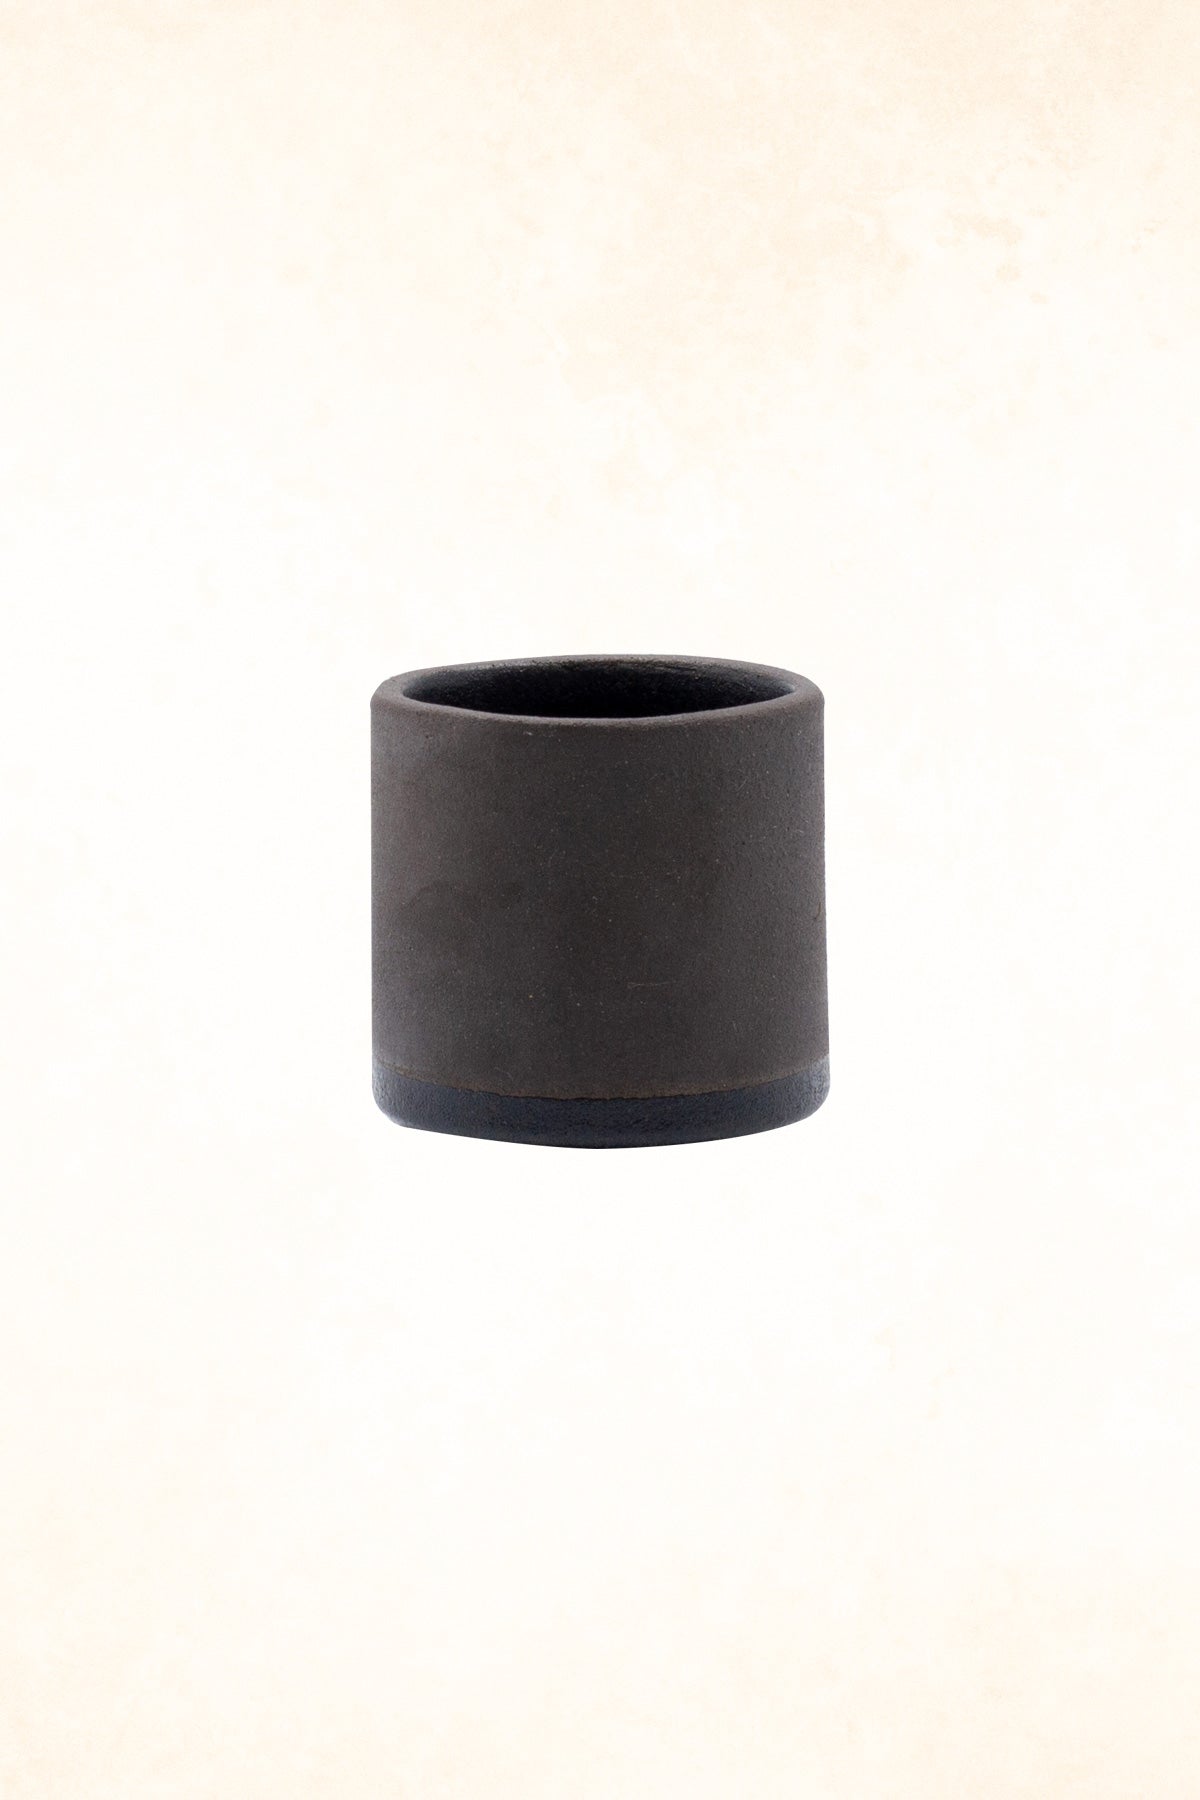 Untold Secretz x Tiled &amp; Clay - Small Cylinder